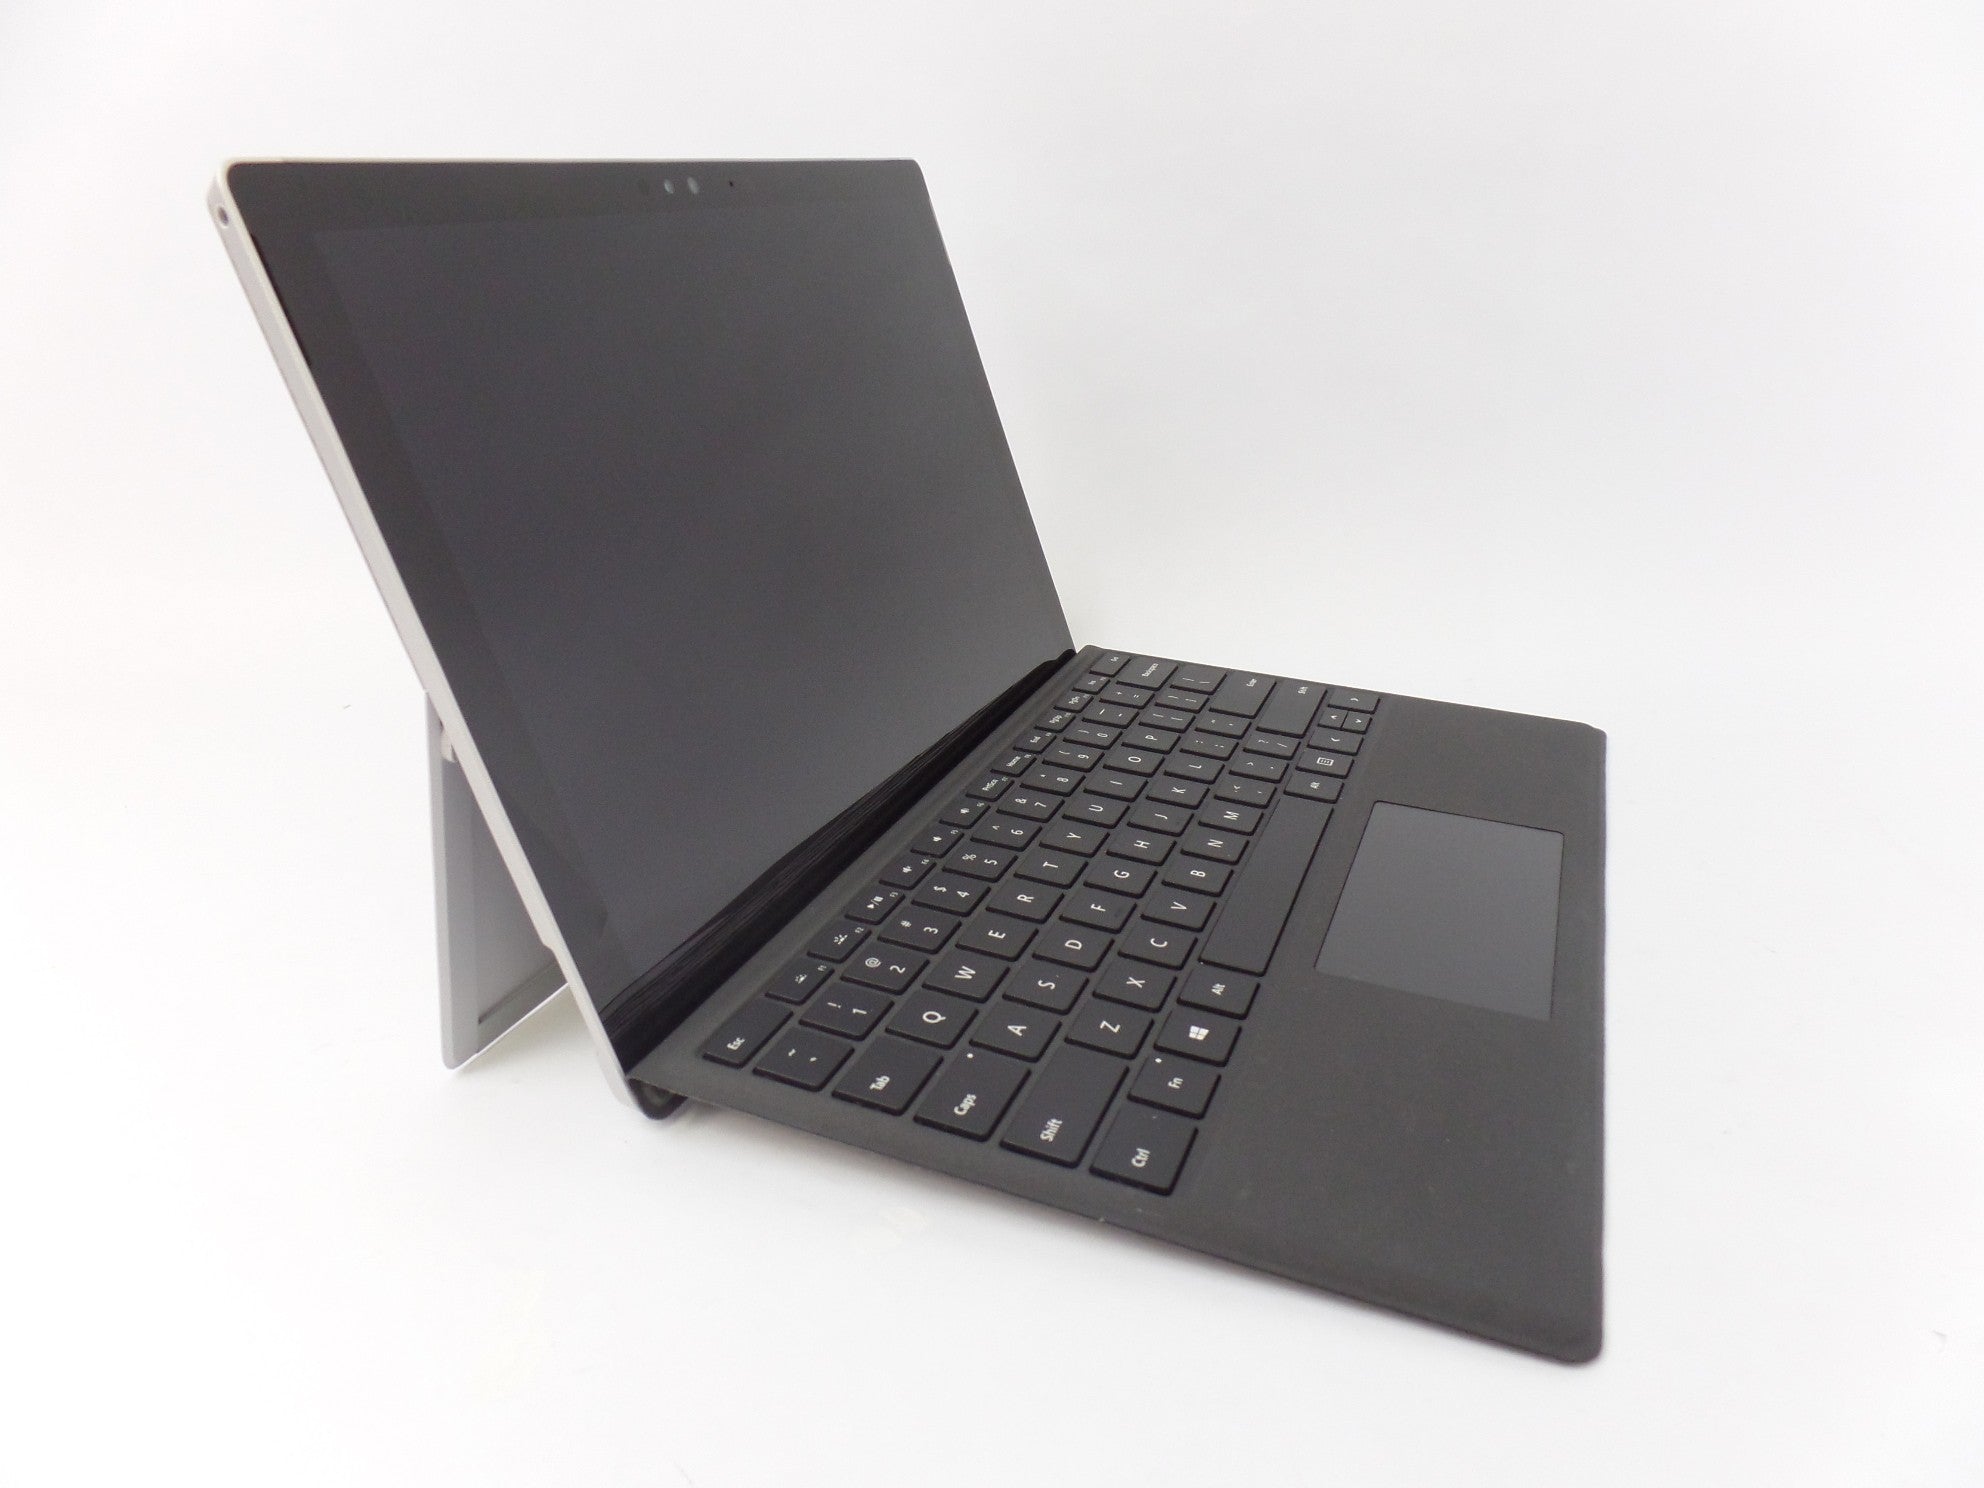 Microsoft Surface Pro 4 1724, Core I5 6300U, 2.4GHz, 8GB